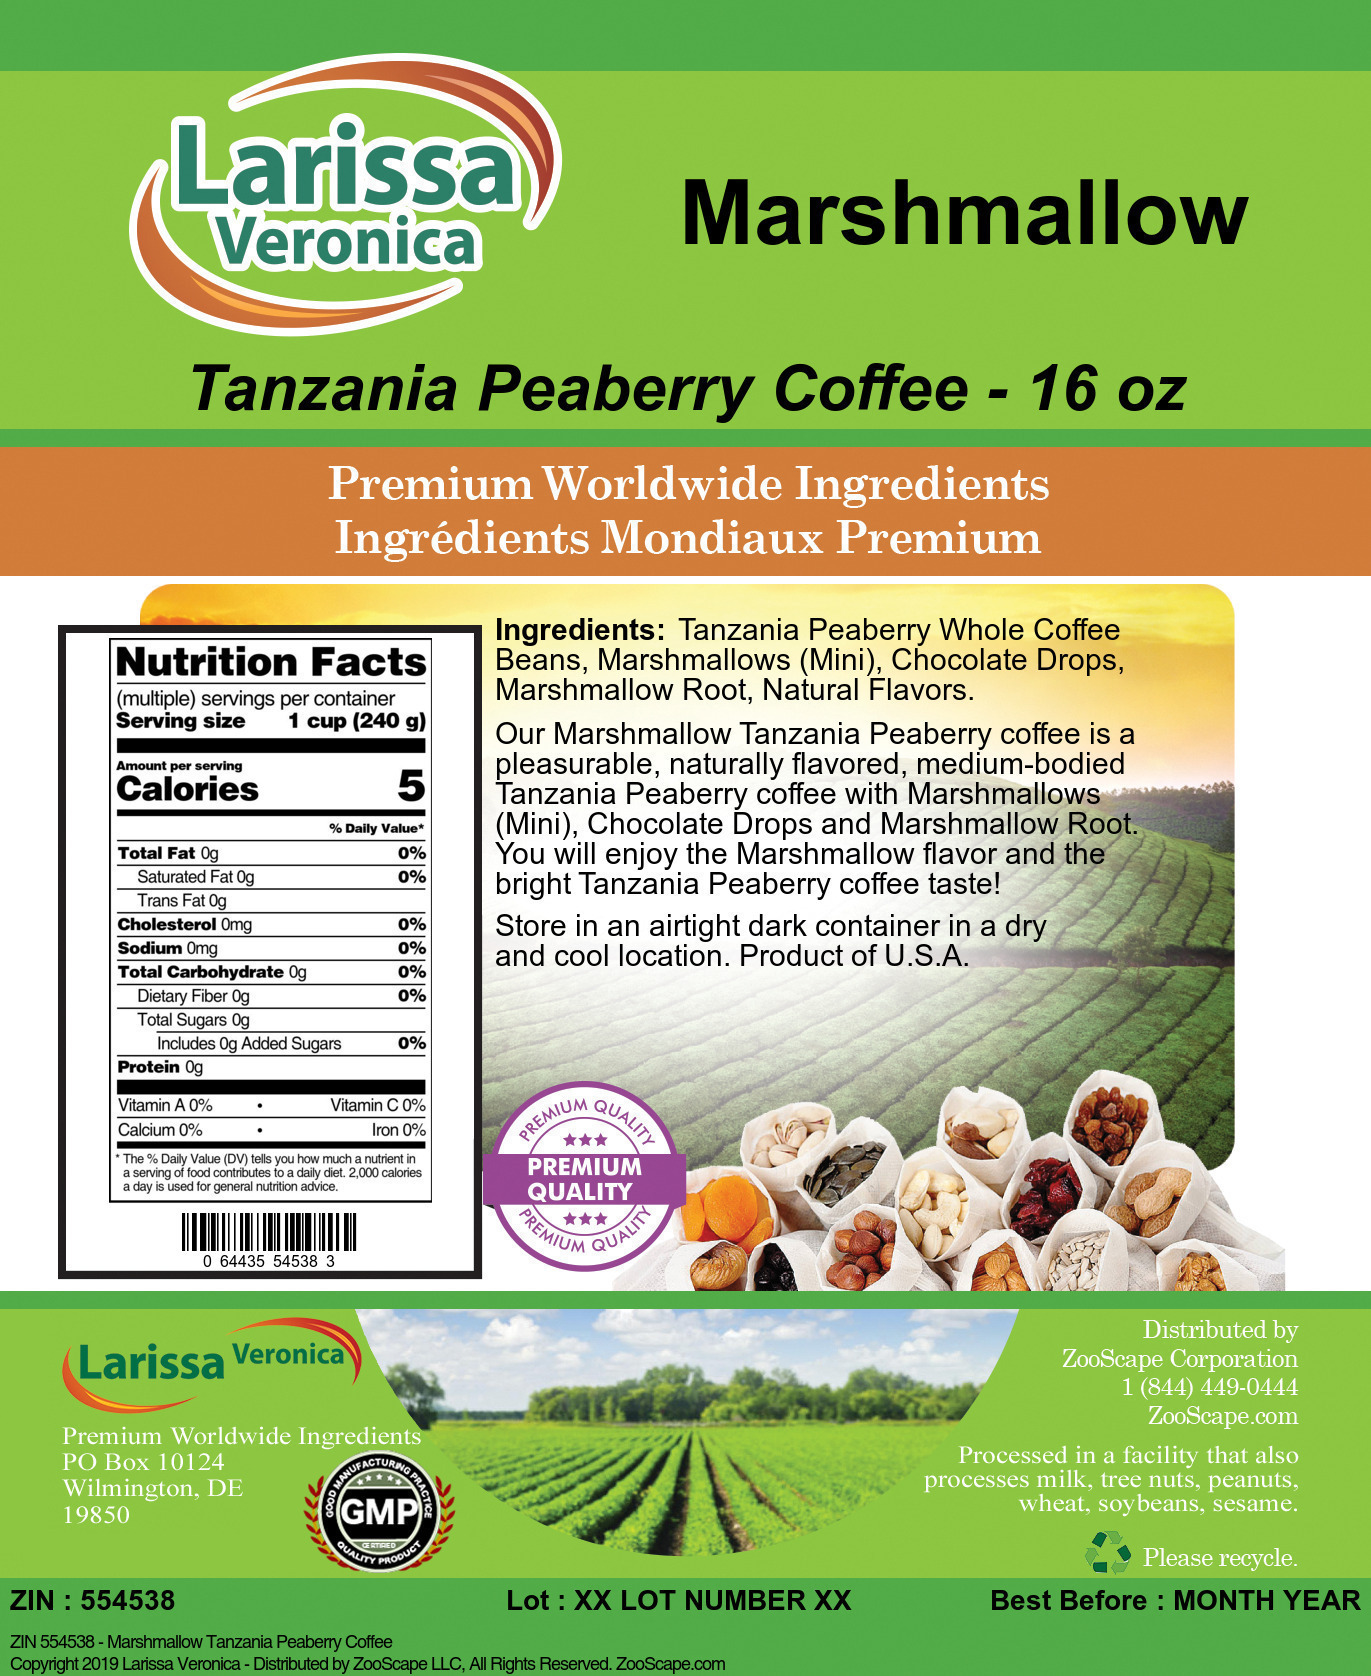 Marshmallow Tanzania Peaberry Coffee - Label